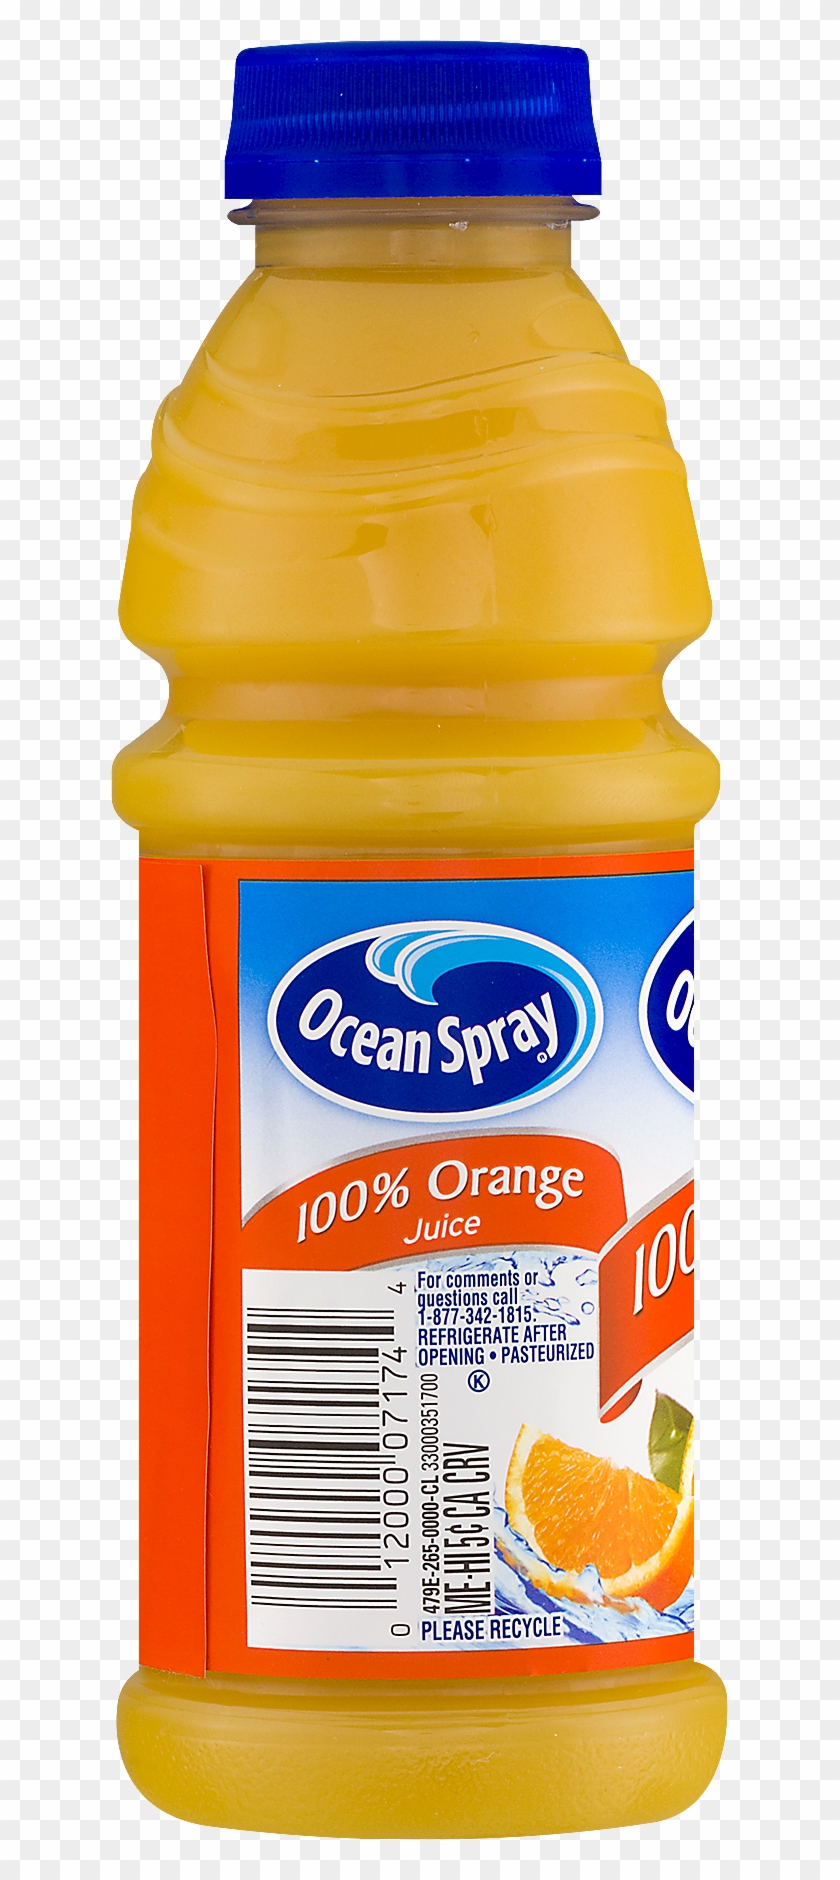 Ocean Spray Orange Juice Ingredients Clipart #5186096